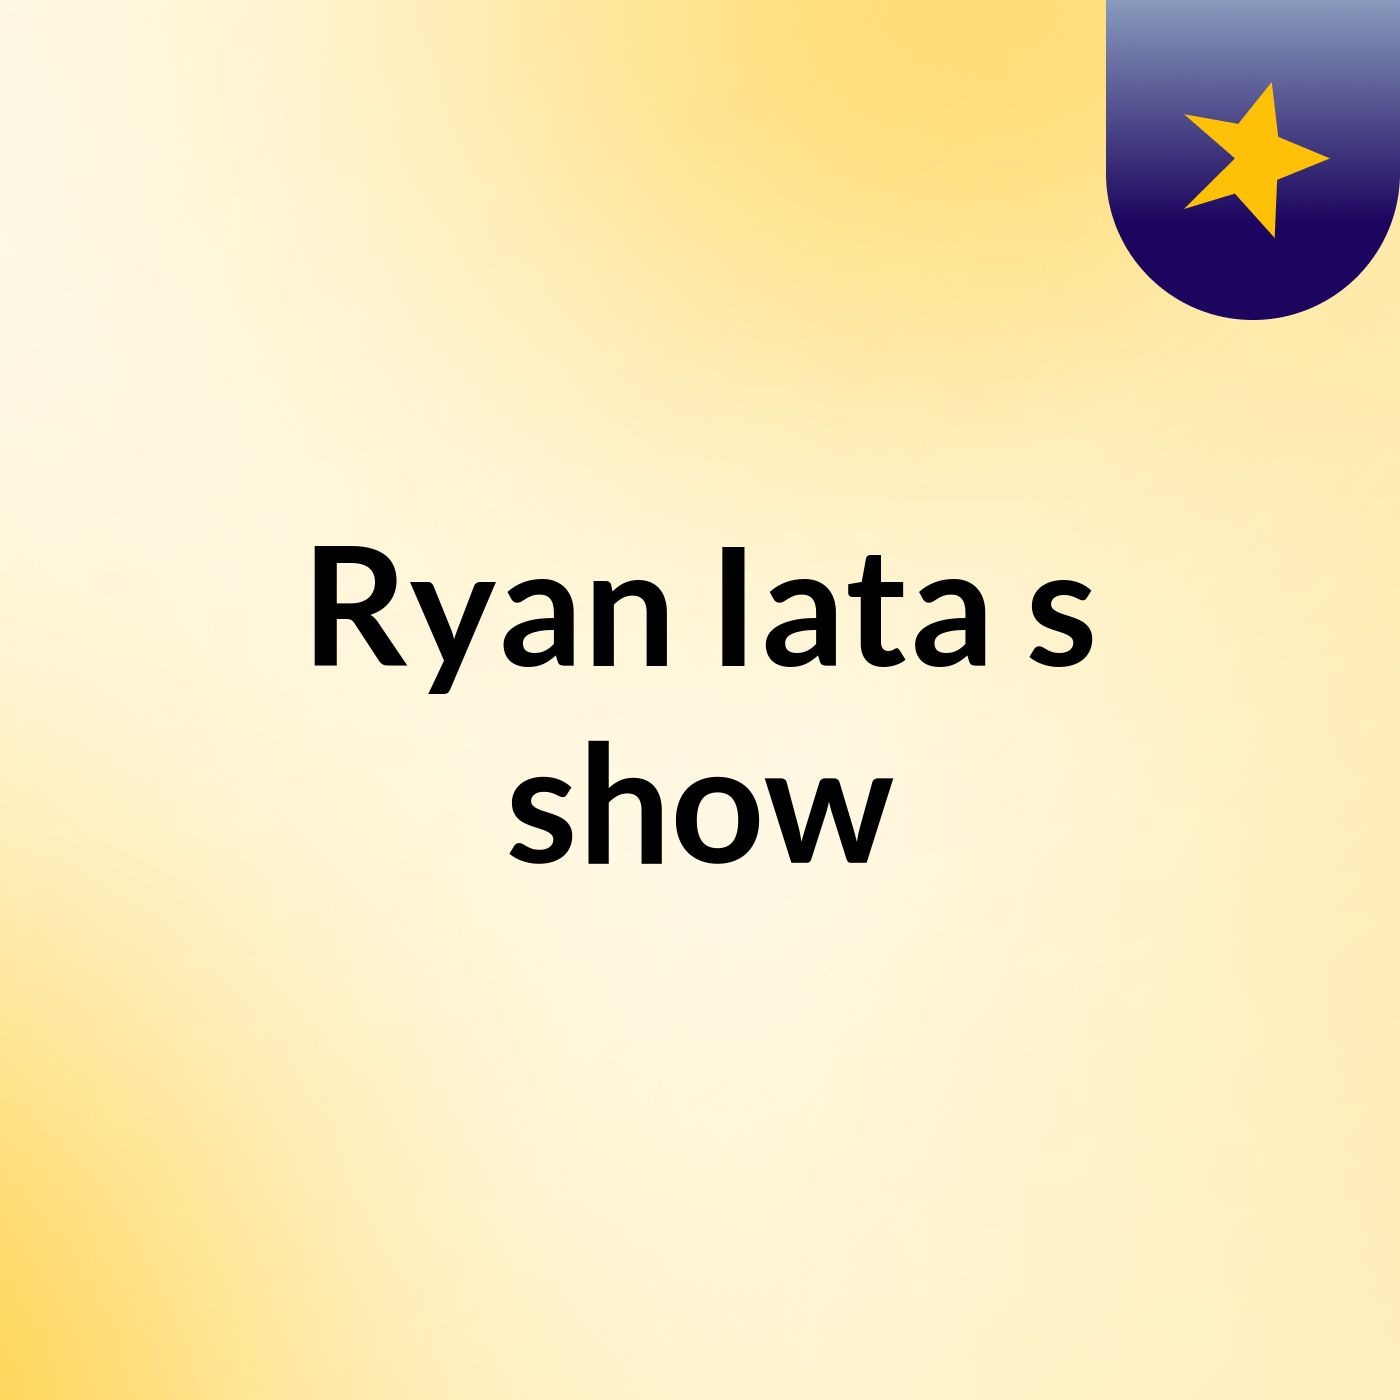 Ryan Iata's show